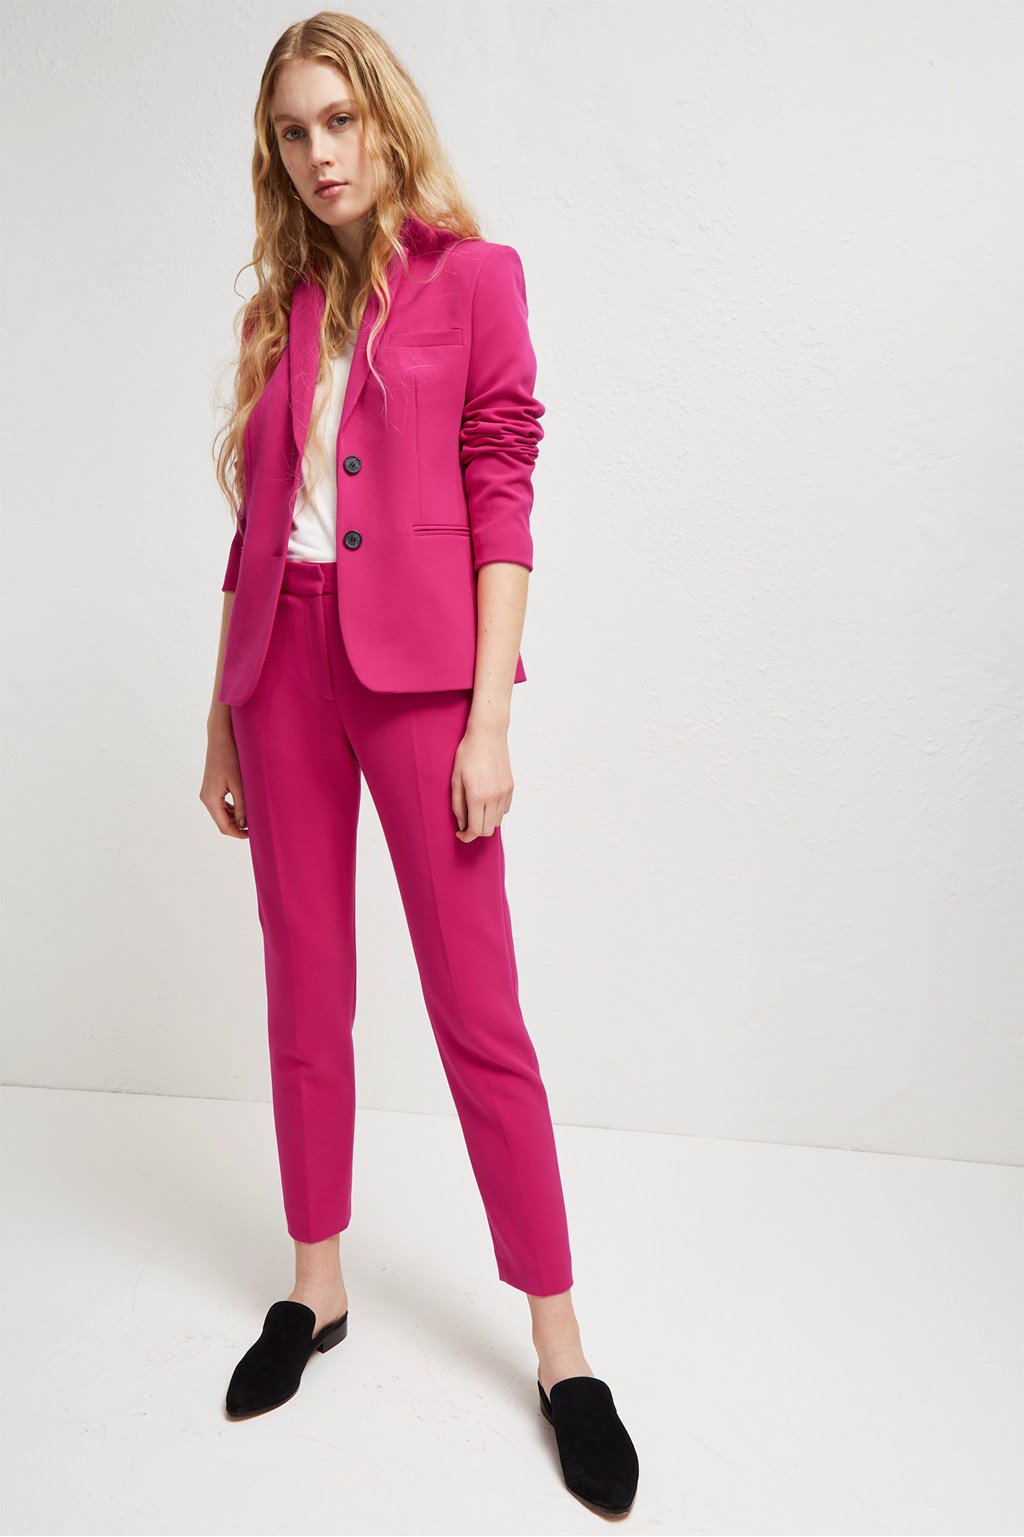 zara pink suit womens